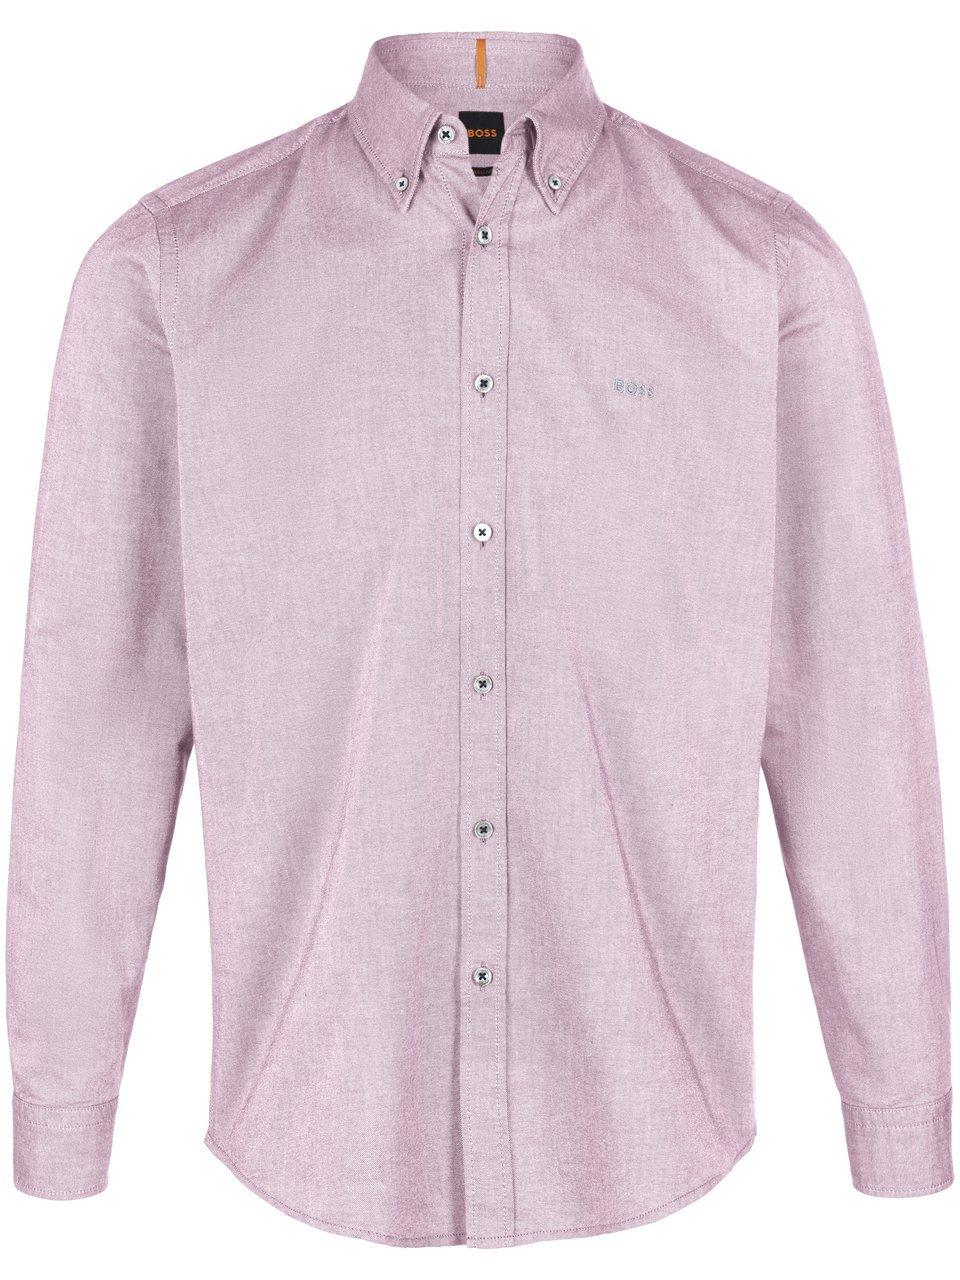 Overhemd Rickert 100% katoen model Rickert Van BOSS roze